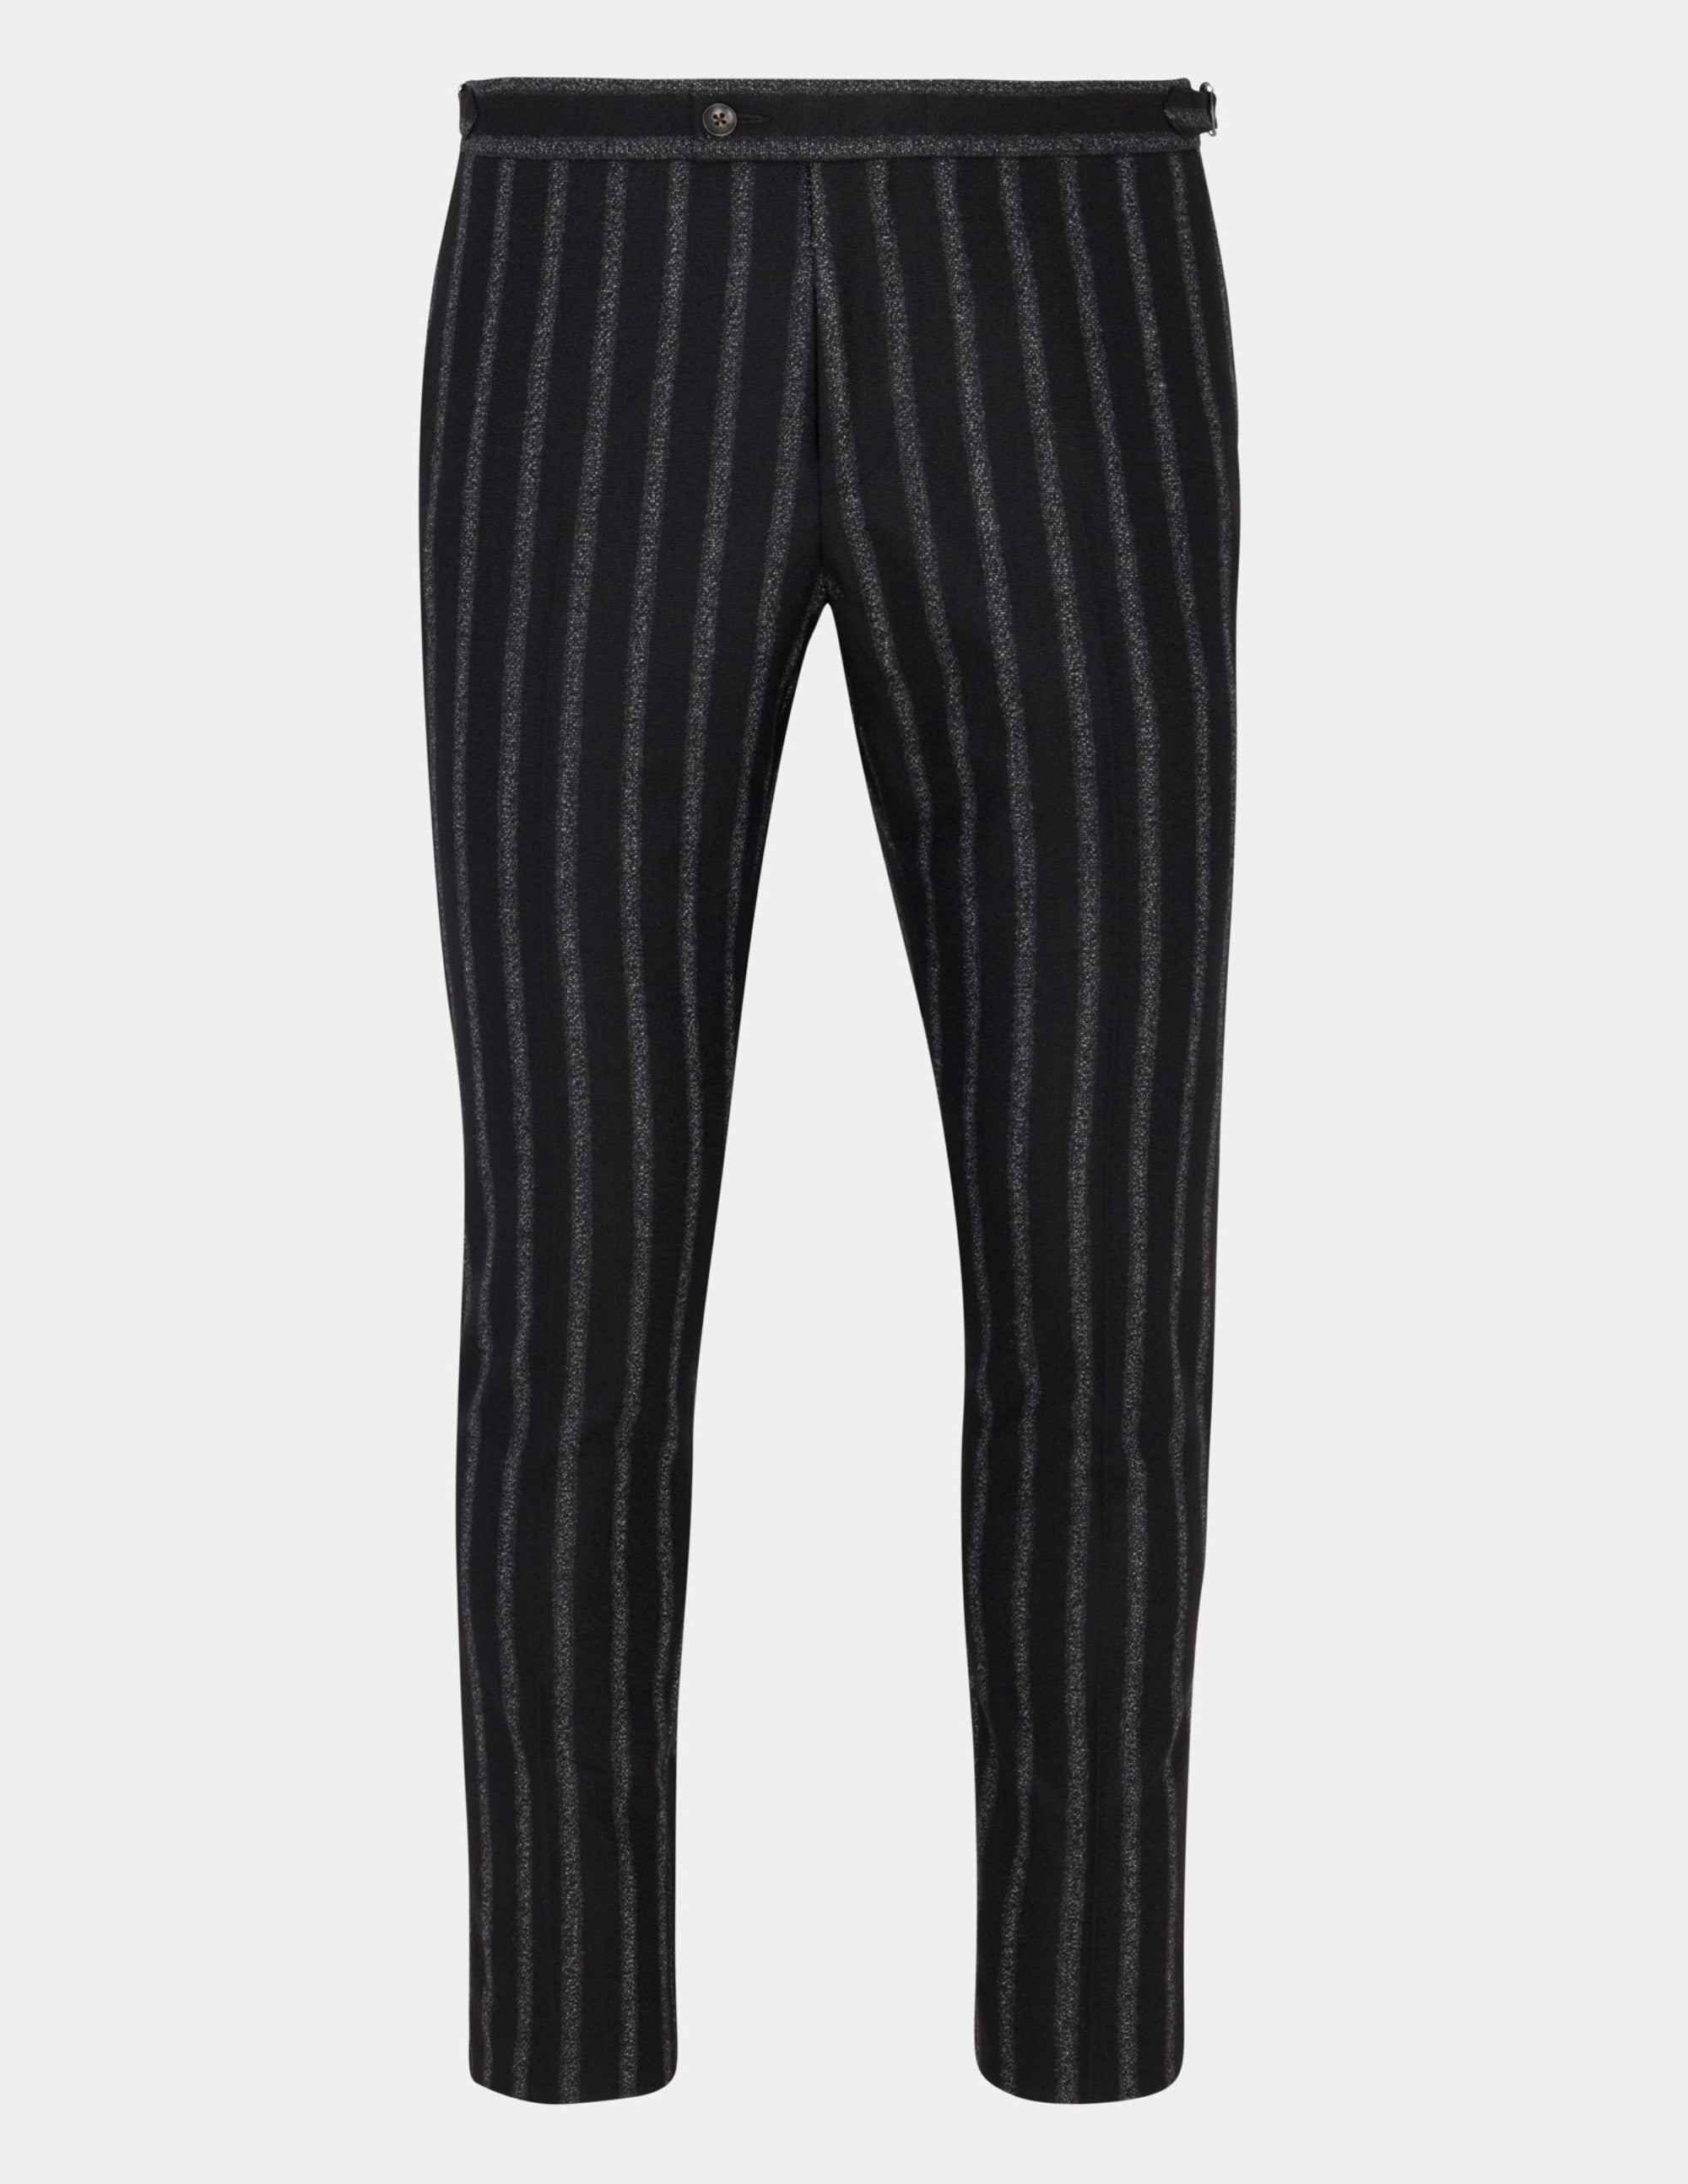 Frank Lyman Black and White Stripe Wide Leg Trousers